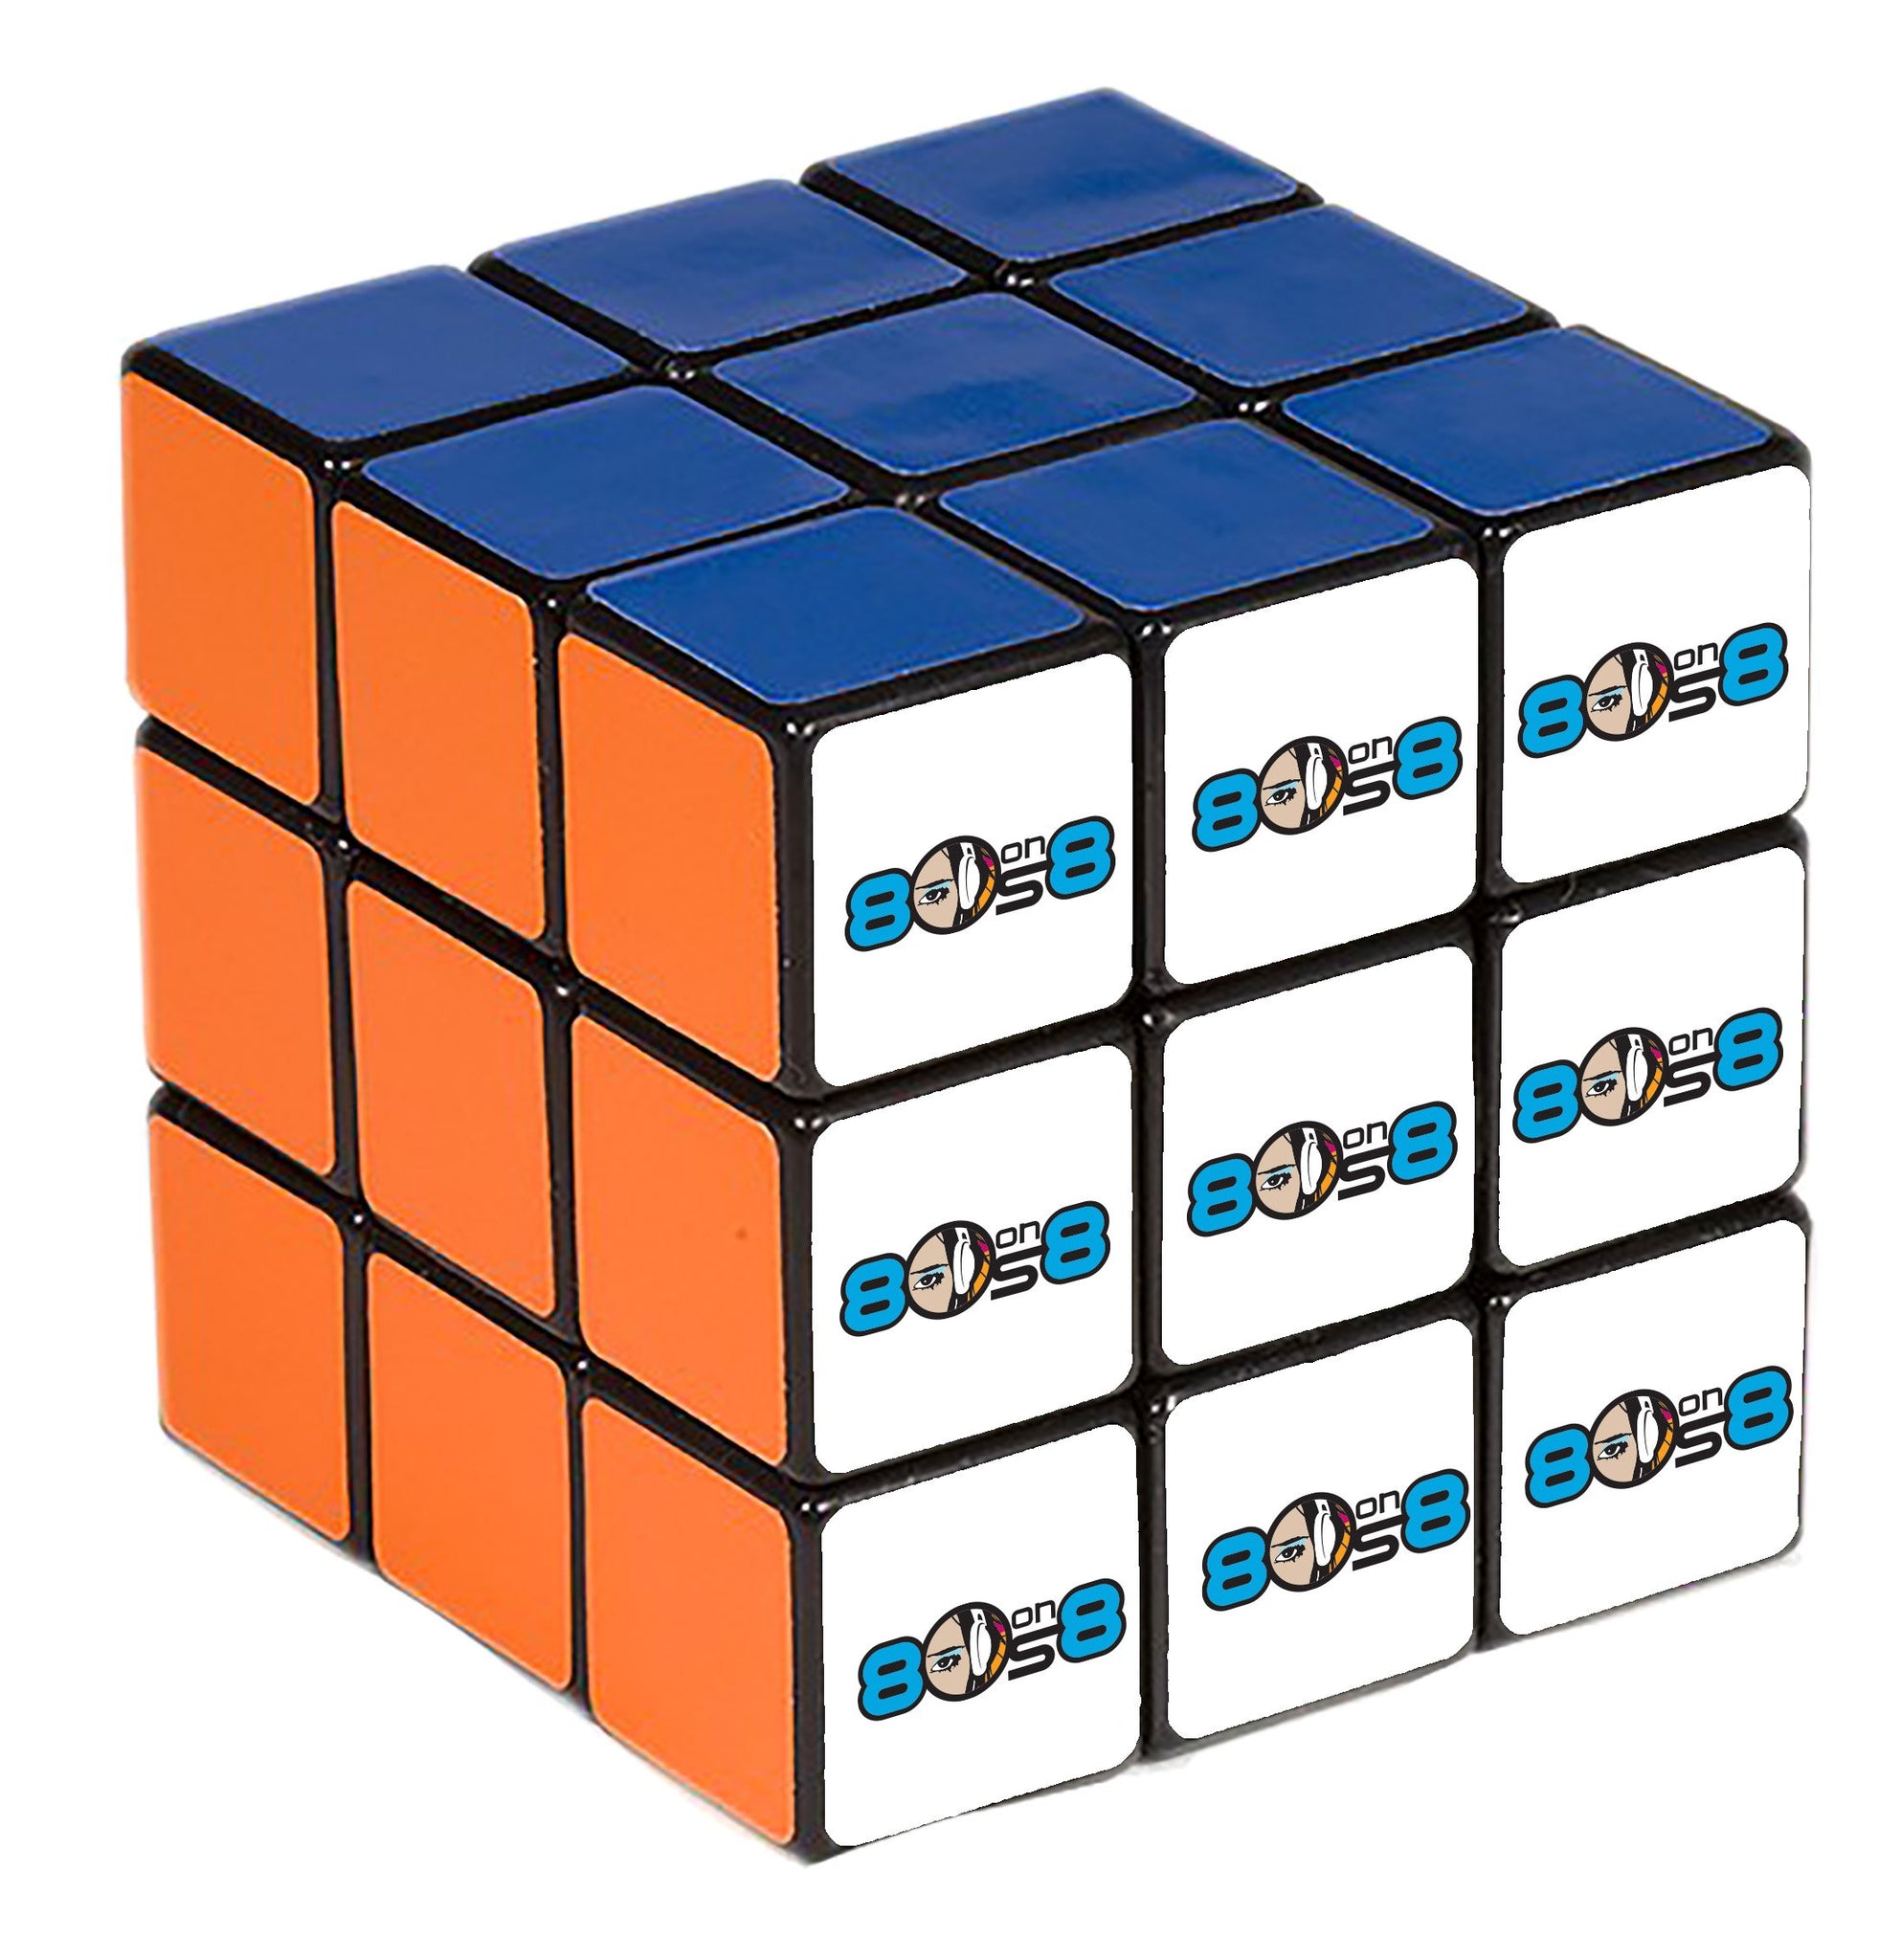 80s On 8: Rubik's Cube